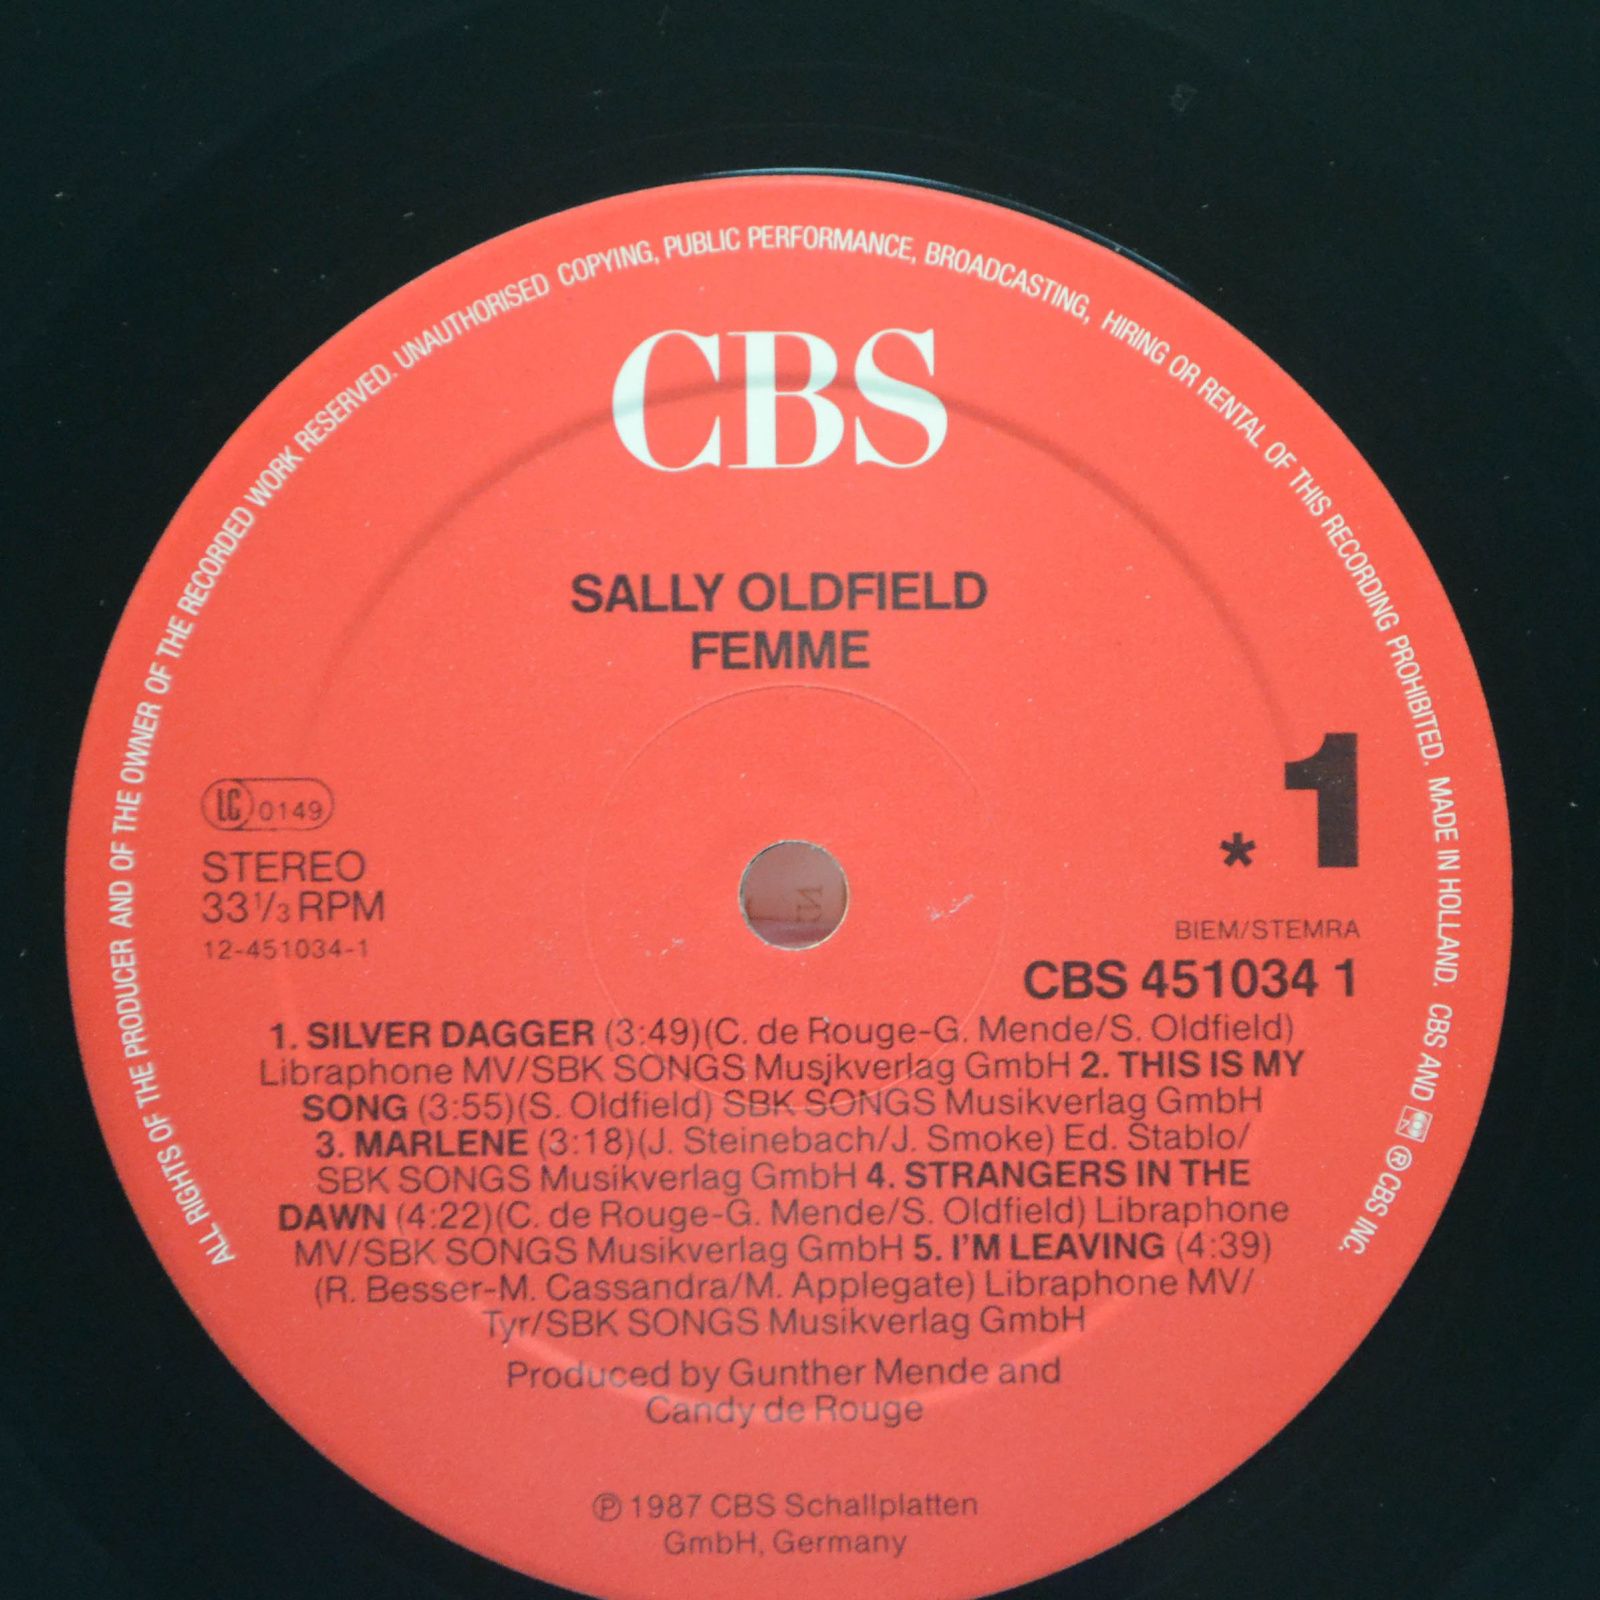 Sally Oldfield — Femme, 1987